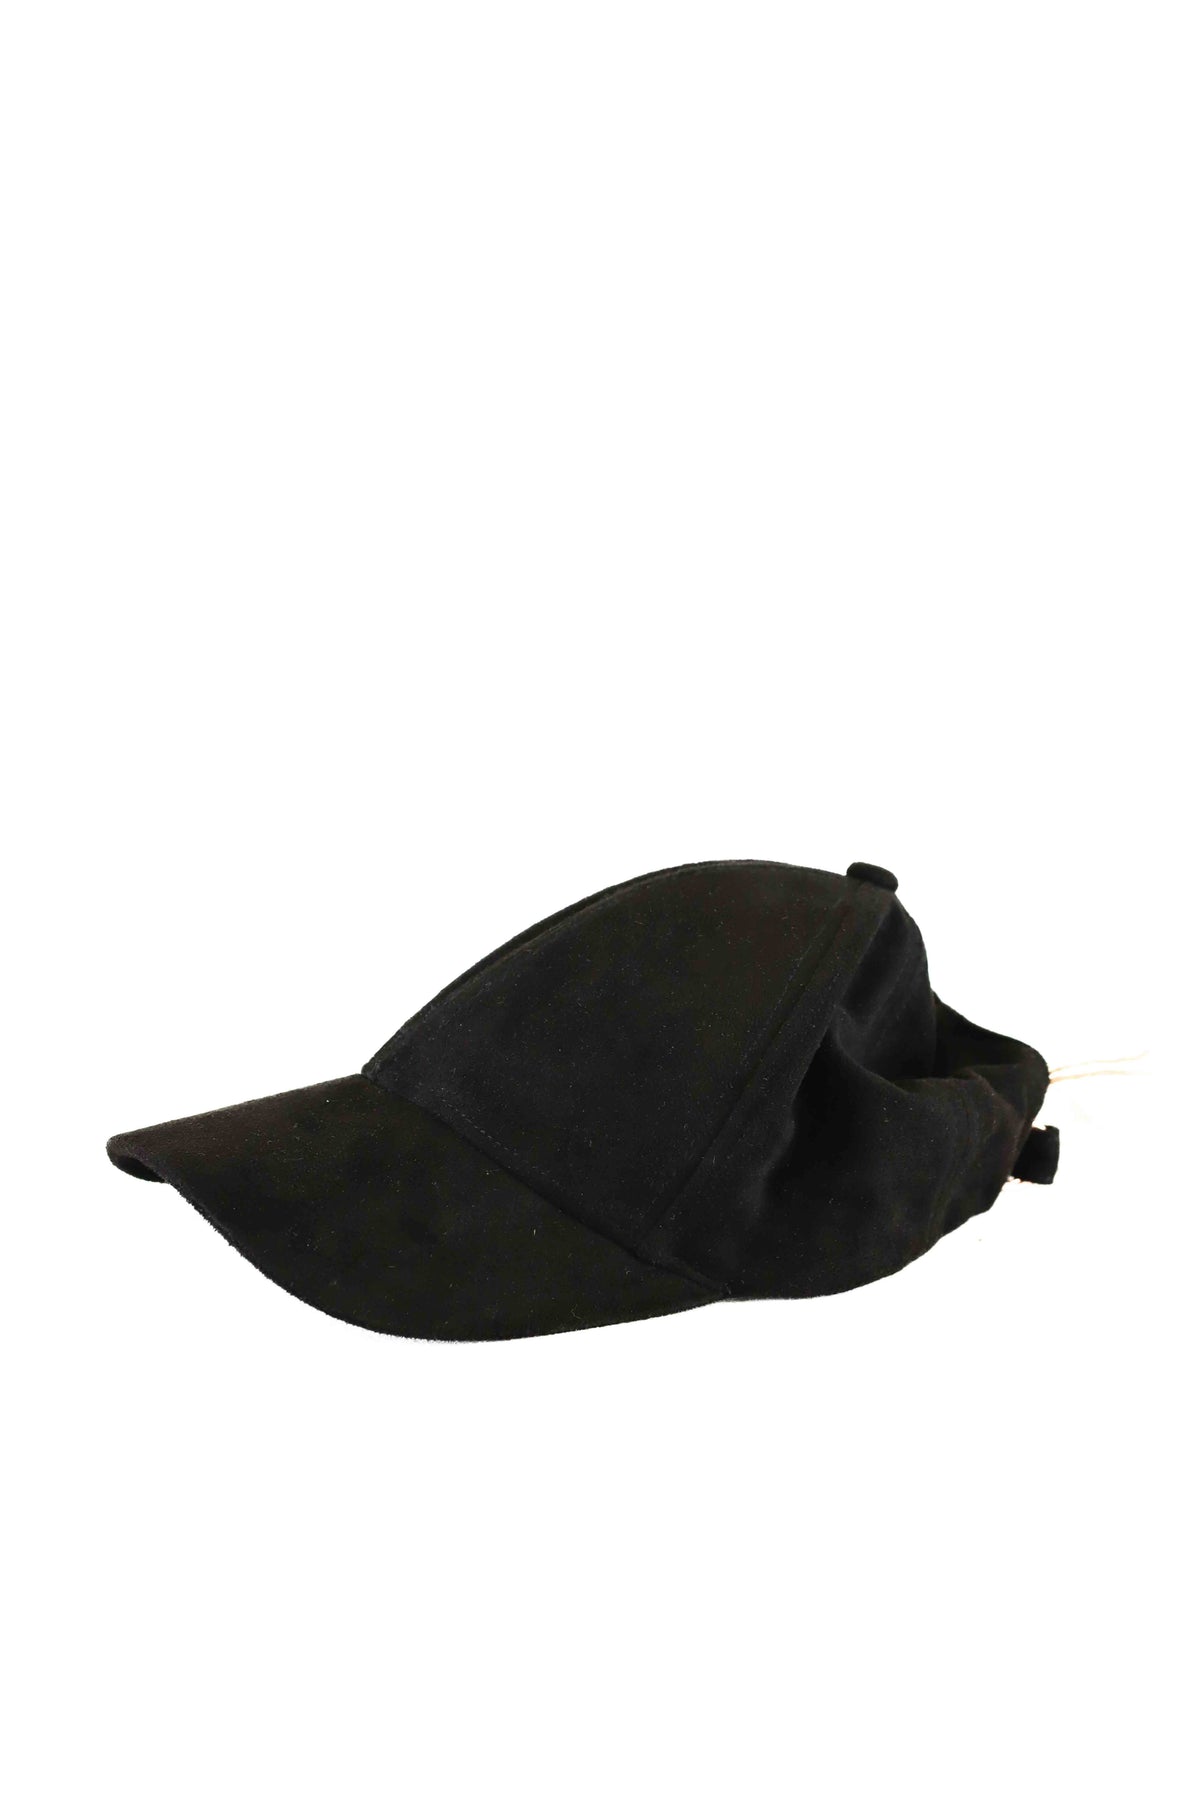 Avenue Black Hat